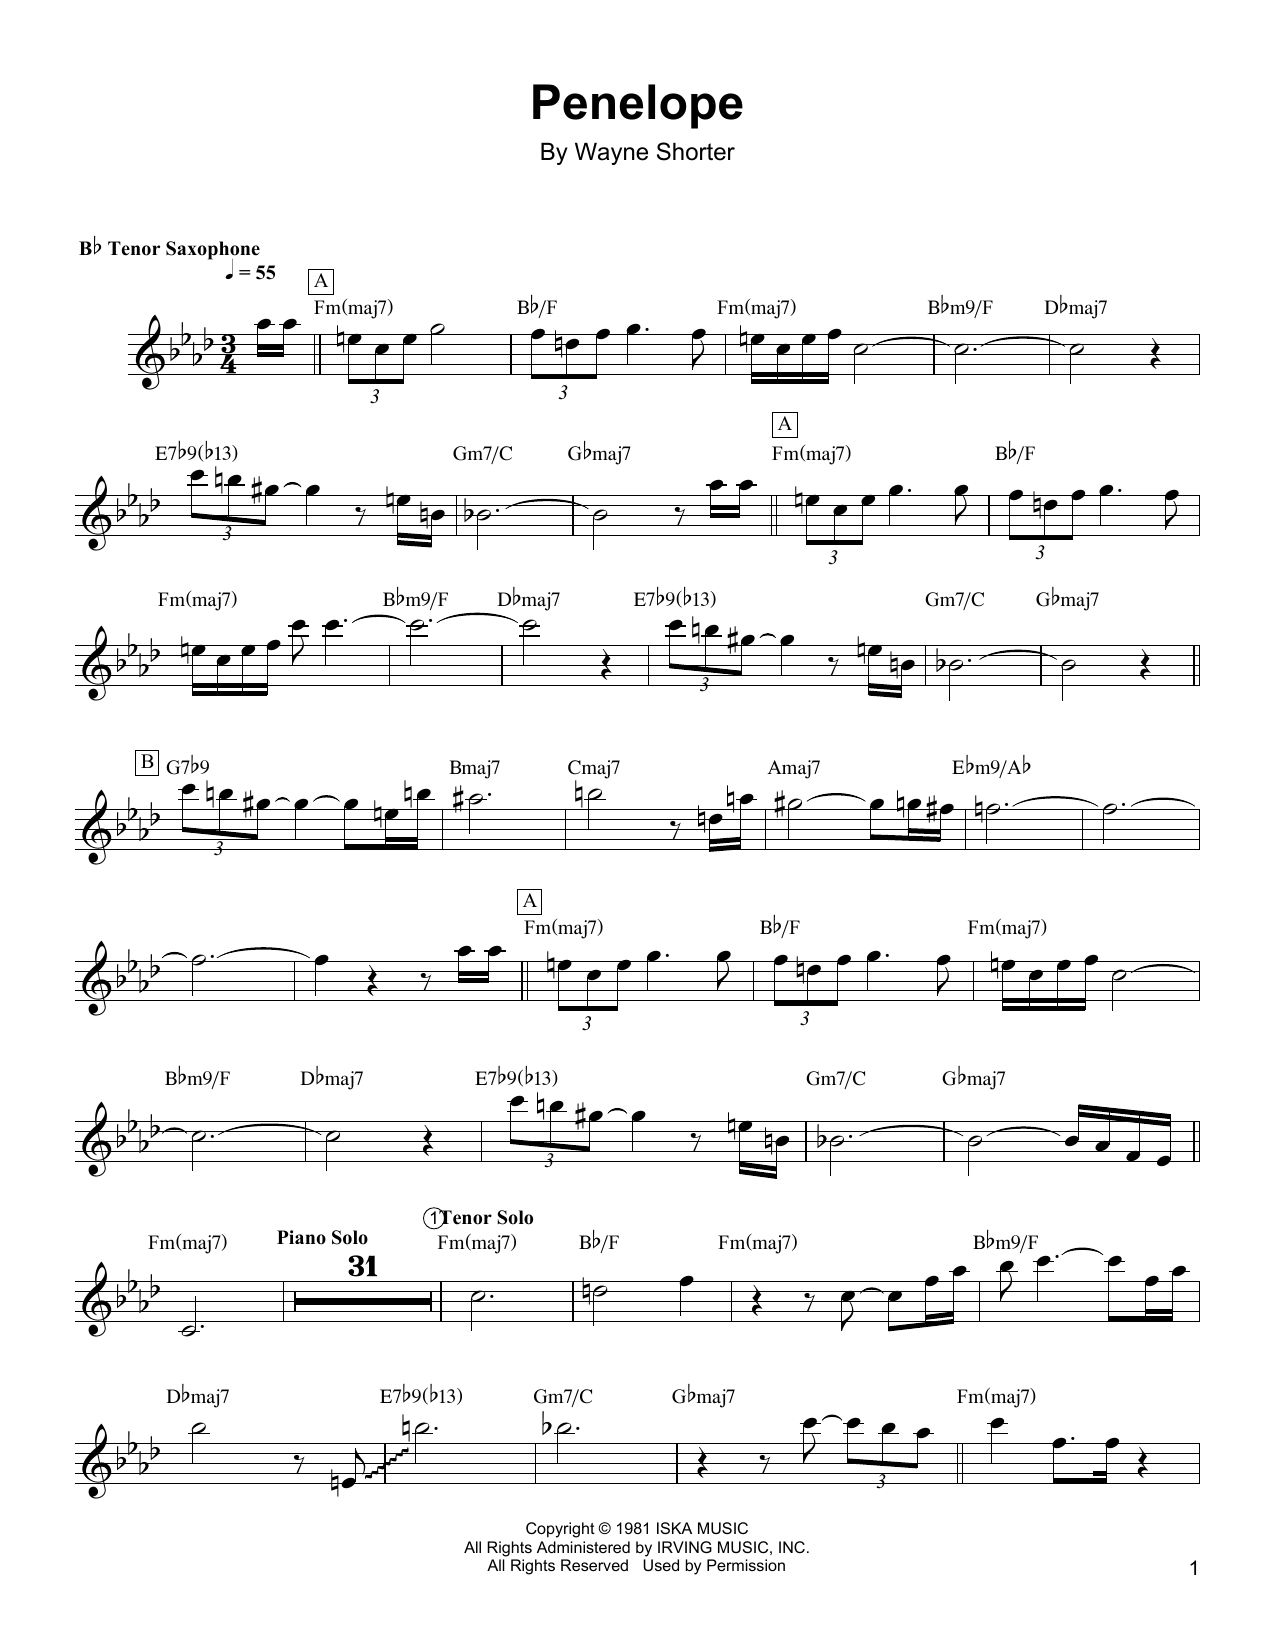 Wayne Shorter Penelope Sheet Music Notes & Chords for Tenor Sax Transcription - Download or Print PDF